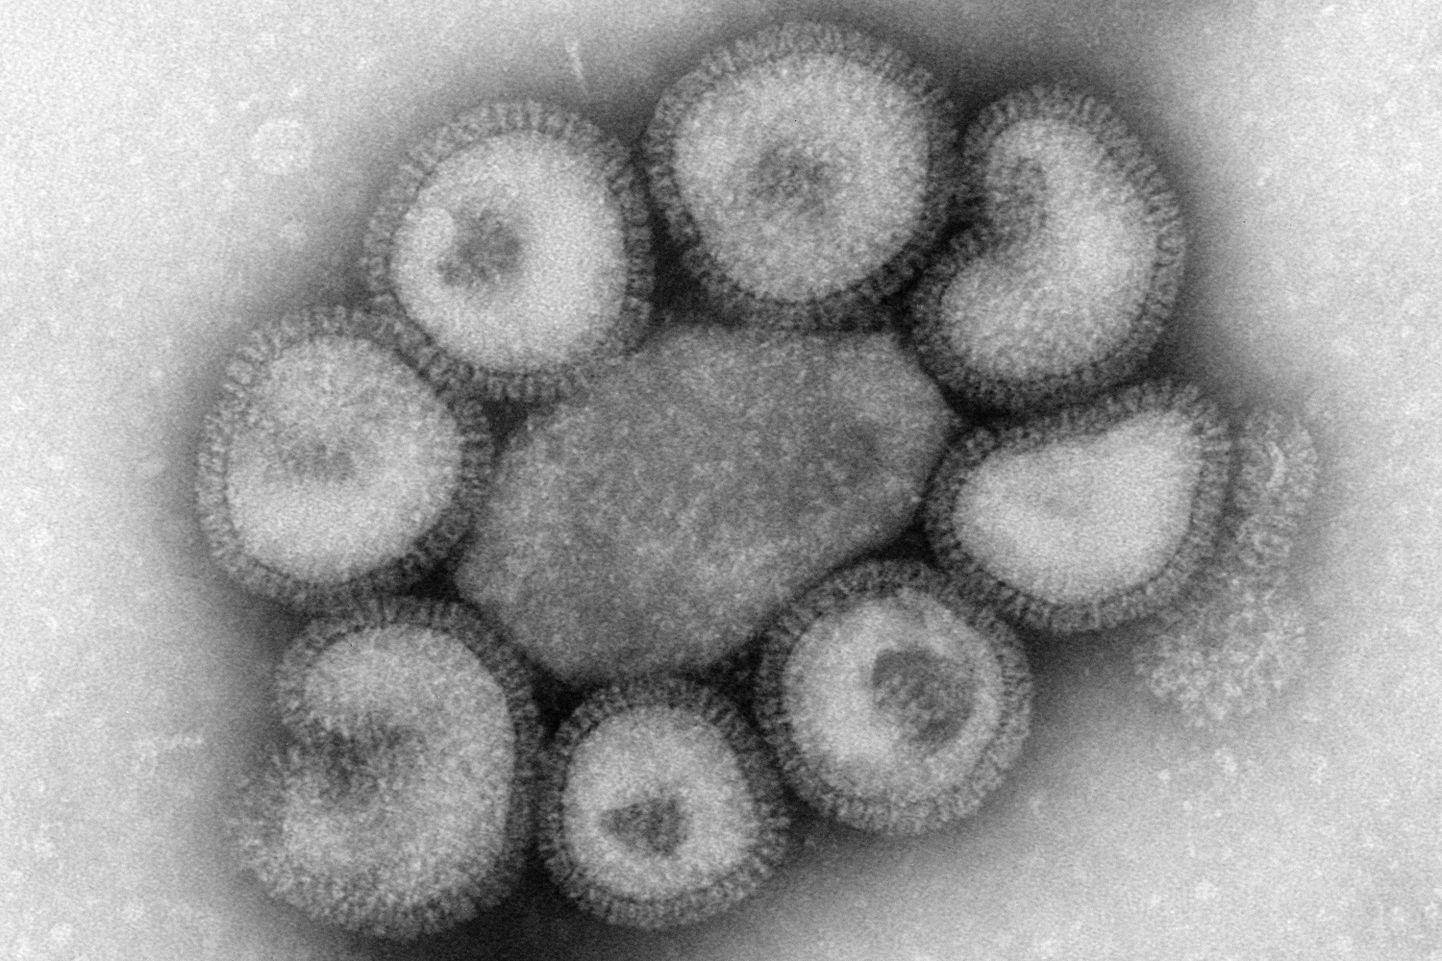 Вирус гриппа под микроскопом. Иллюстративное фото.